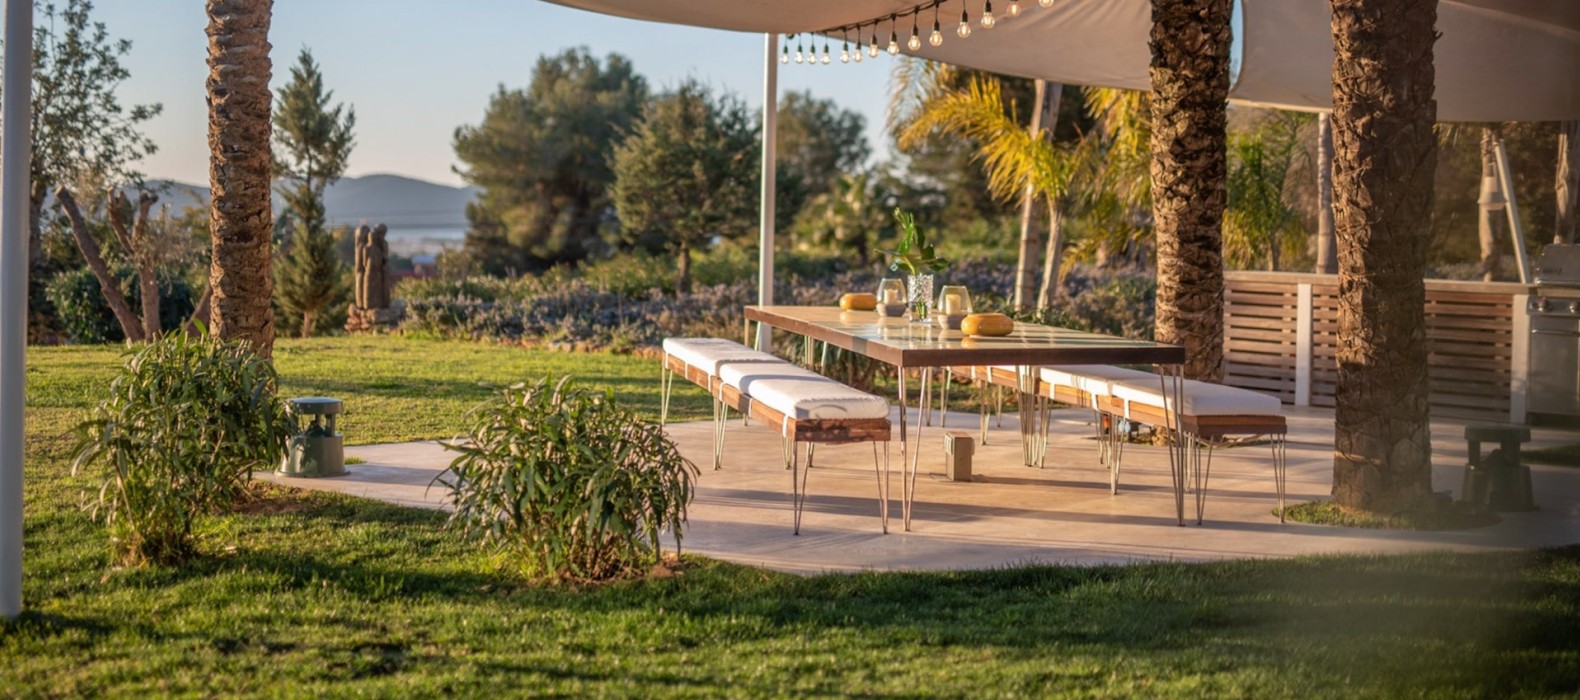 Exterior dining area of Villa Liama in Ibiza